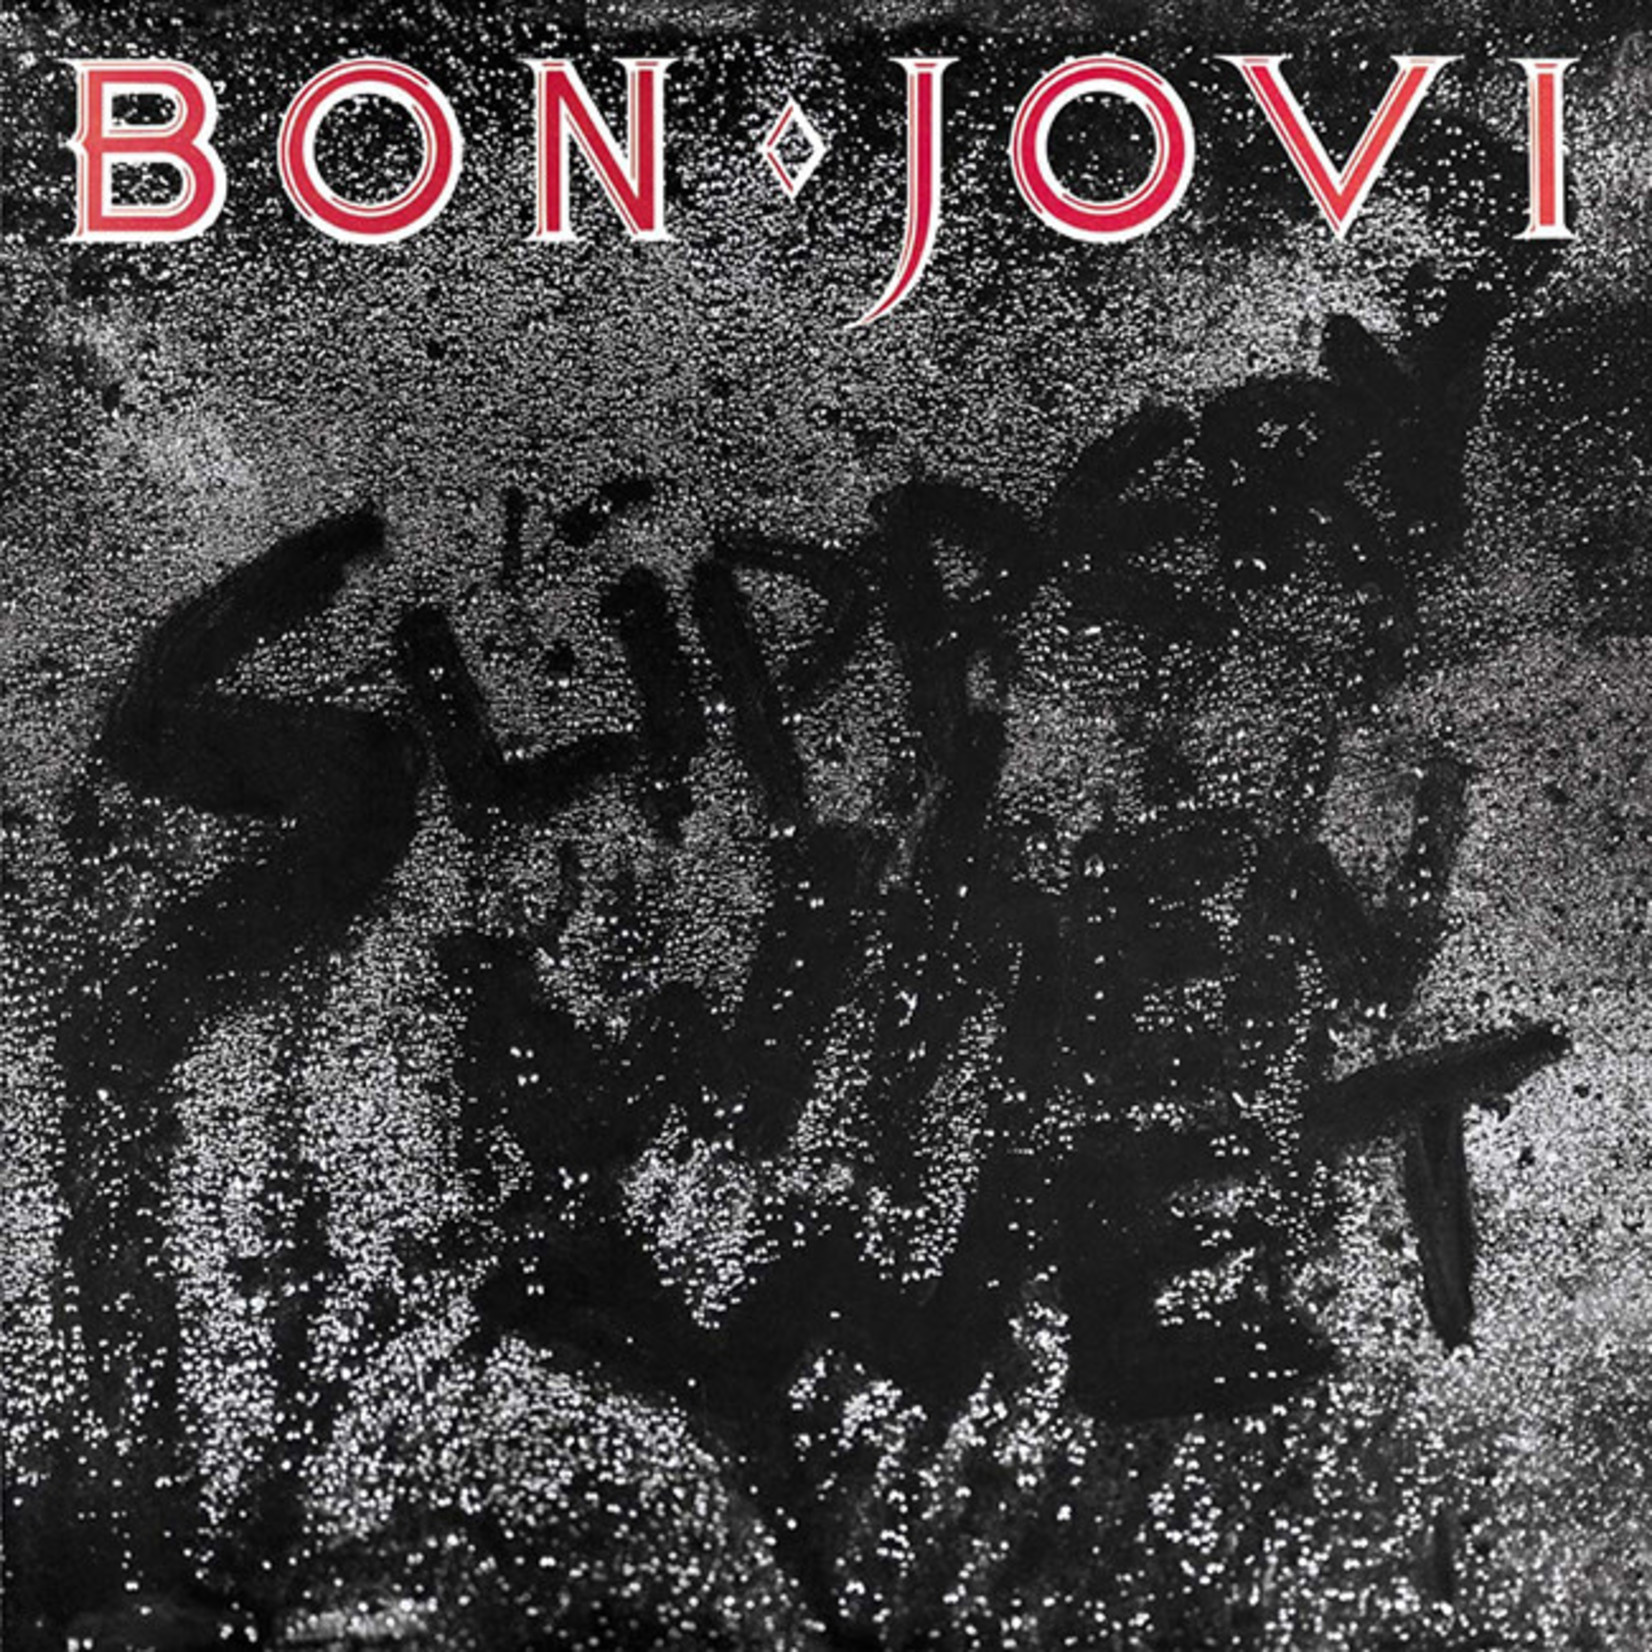 [New] Bon Jovi - Slippery When Wet